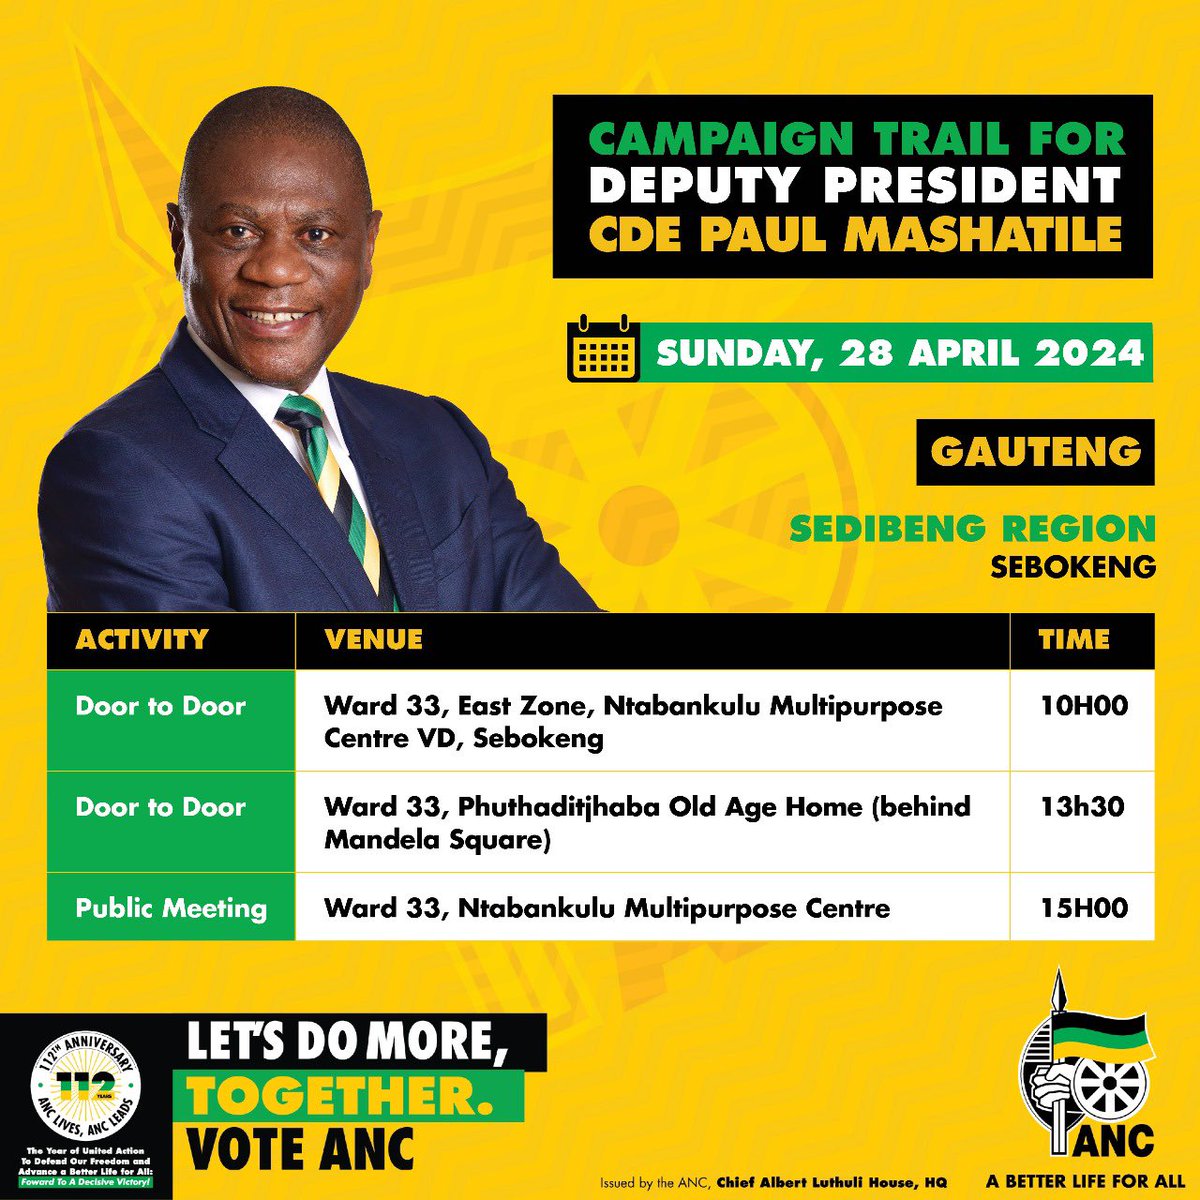 Tomorrow the ANC Deputy President, Cde Paul Mashatile will lead the campaign trail in Sedibeng, Gauteng. #VoteANC #VoteANC2024 #LetsDoMoreTogether